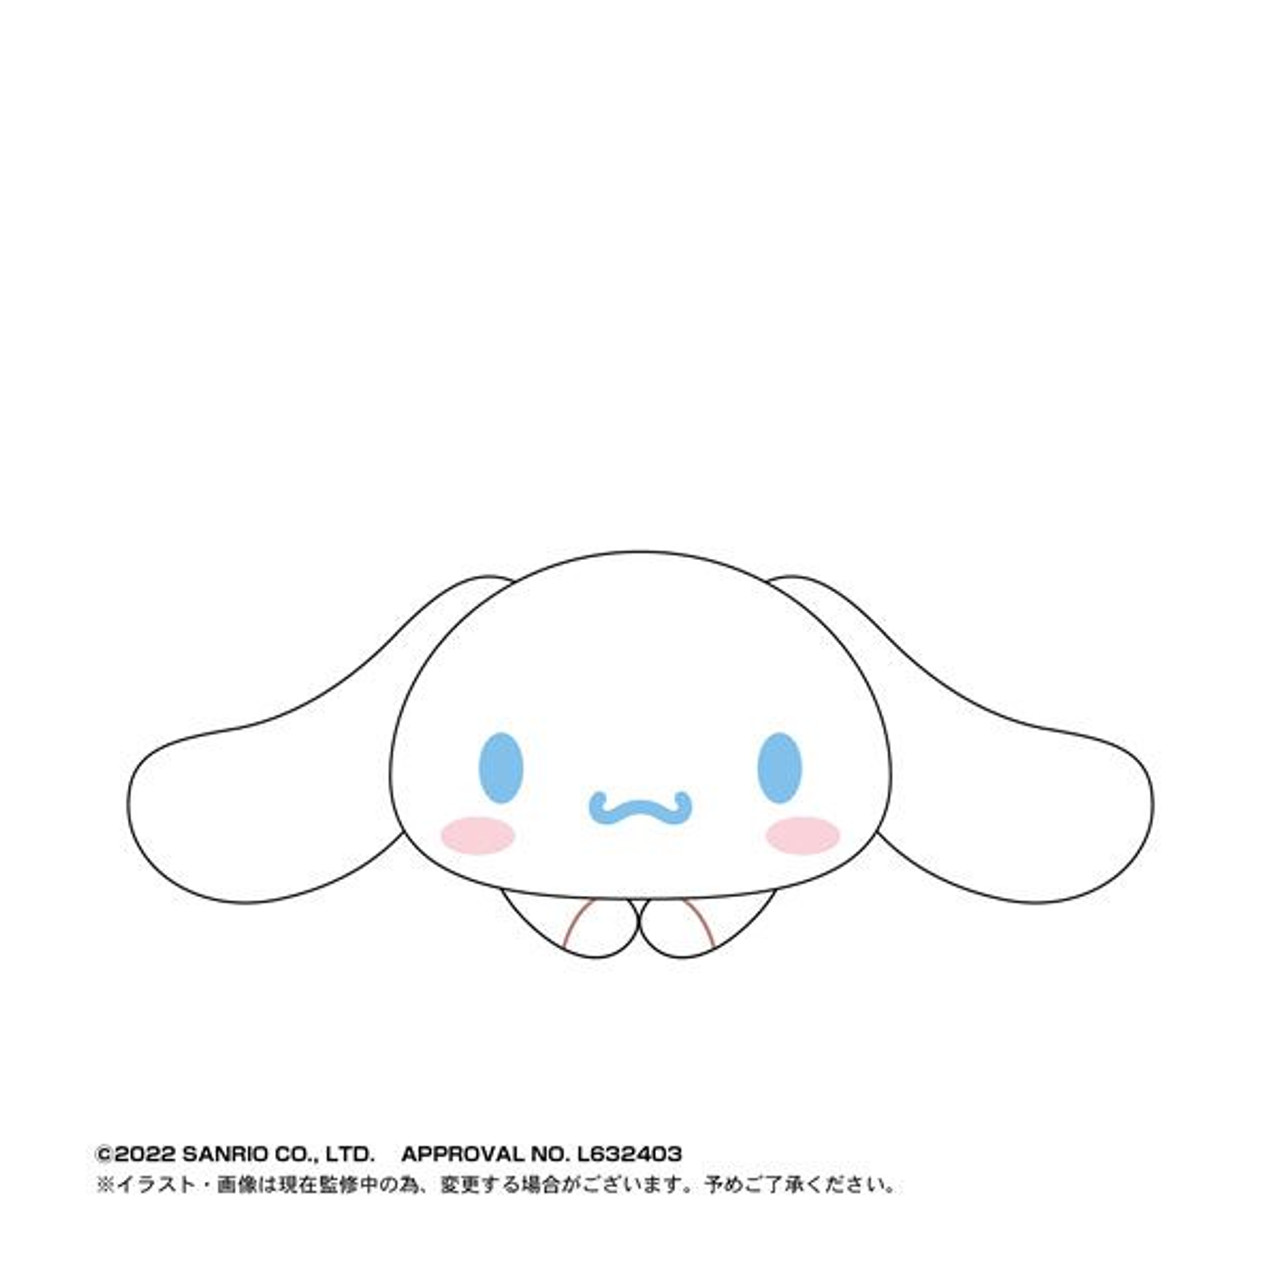 Sanrio Hug X Character Mascot Max Limited 2-Inch Plush